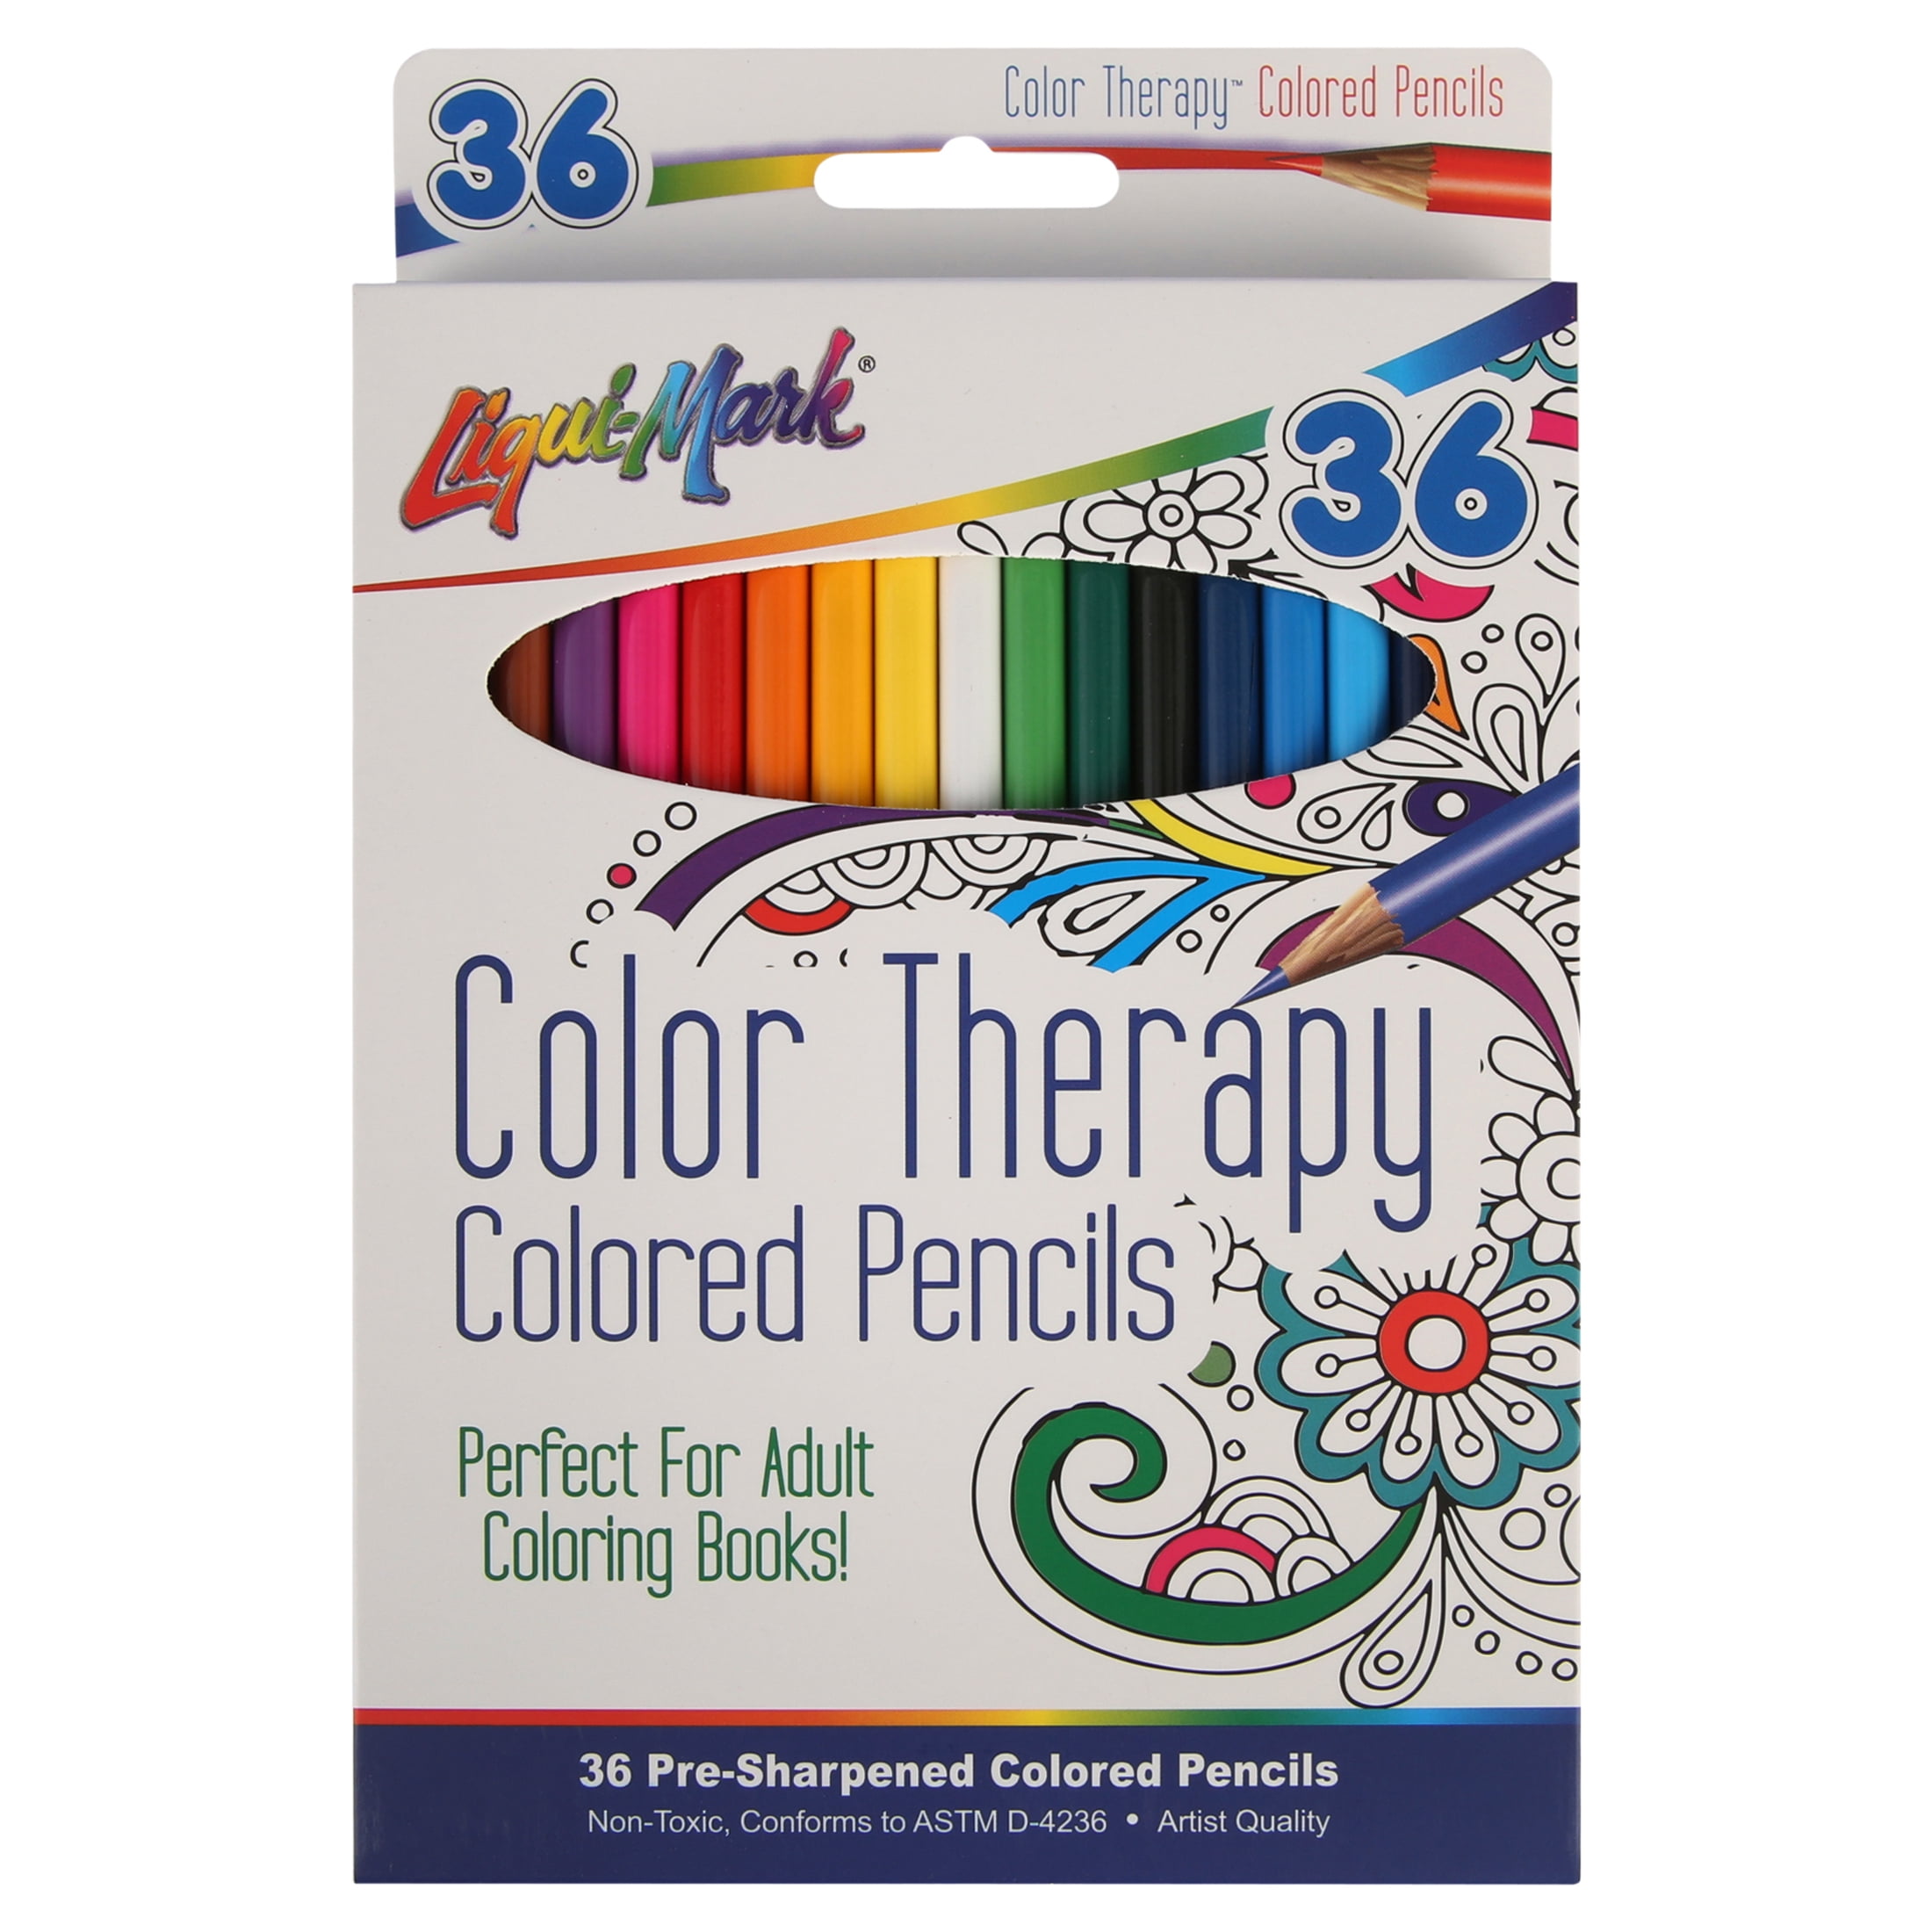 KolorKit Adult Coloring Book Kit